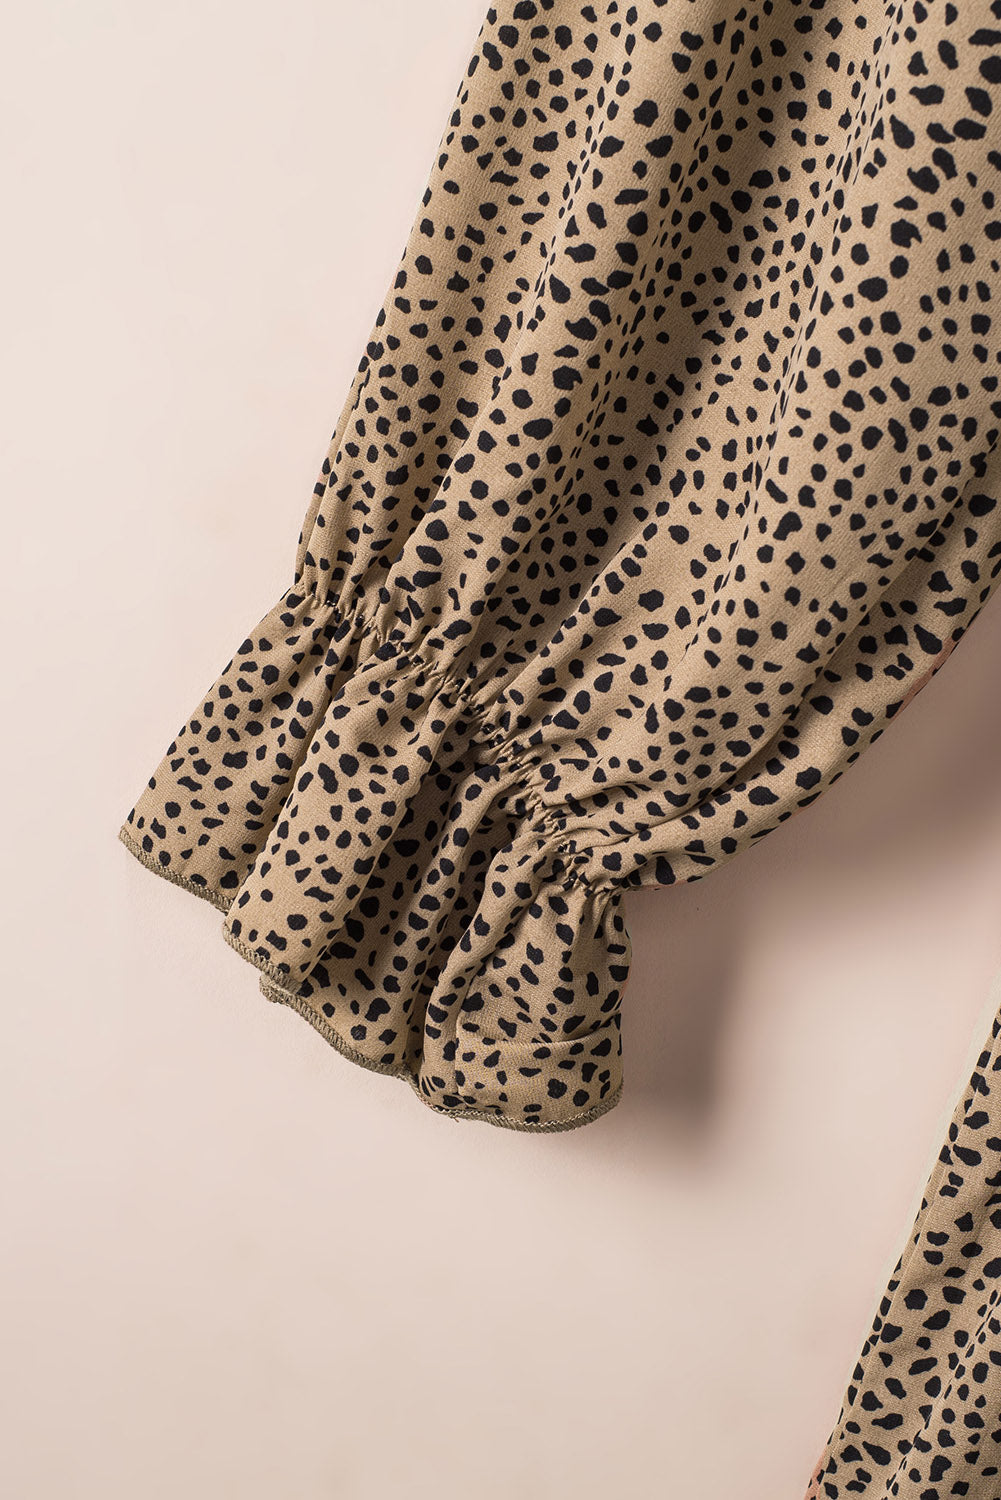 Leopard Spotted Ruffle Cuffs Elastic Waist Plus Size Dress